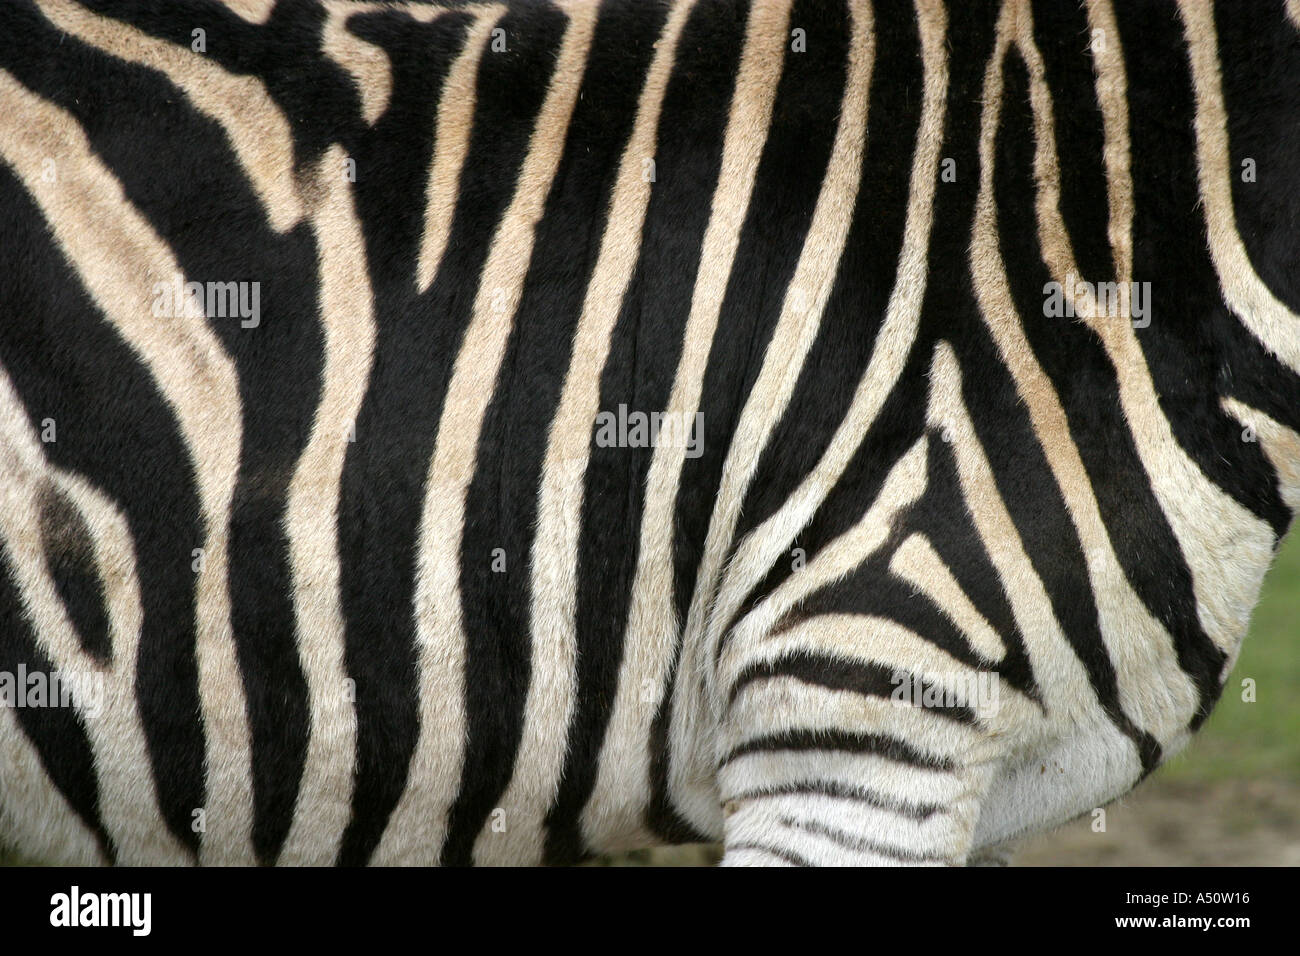 Zebra patterned skin Stock Photo